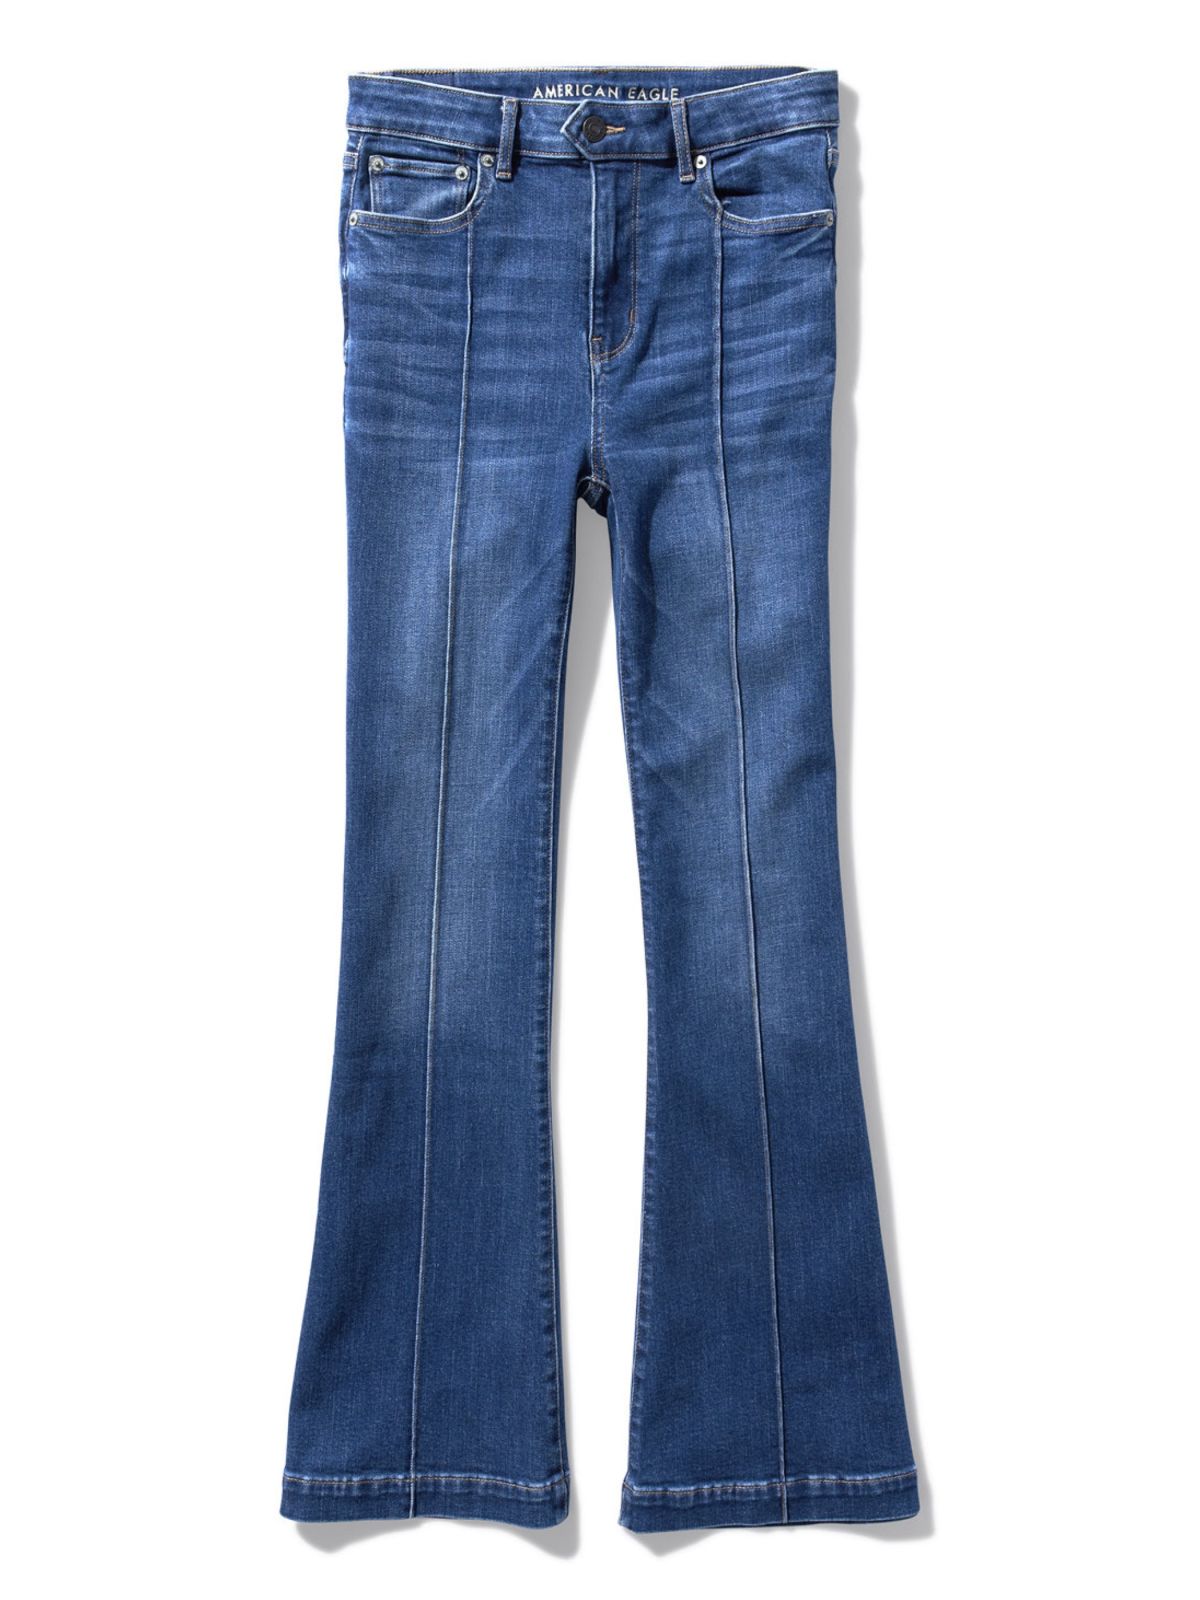  ג'ינס בגזרה מתרחבת Super hi-rise jegging של AMERICAN EAGLE